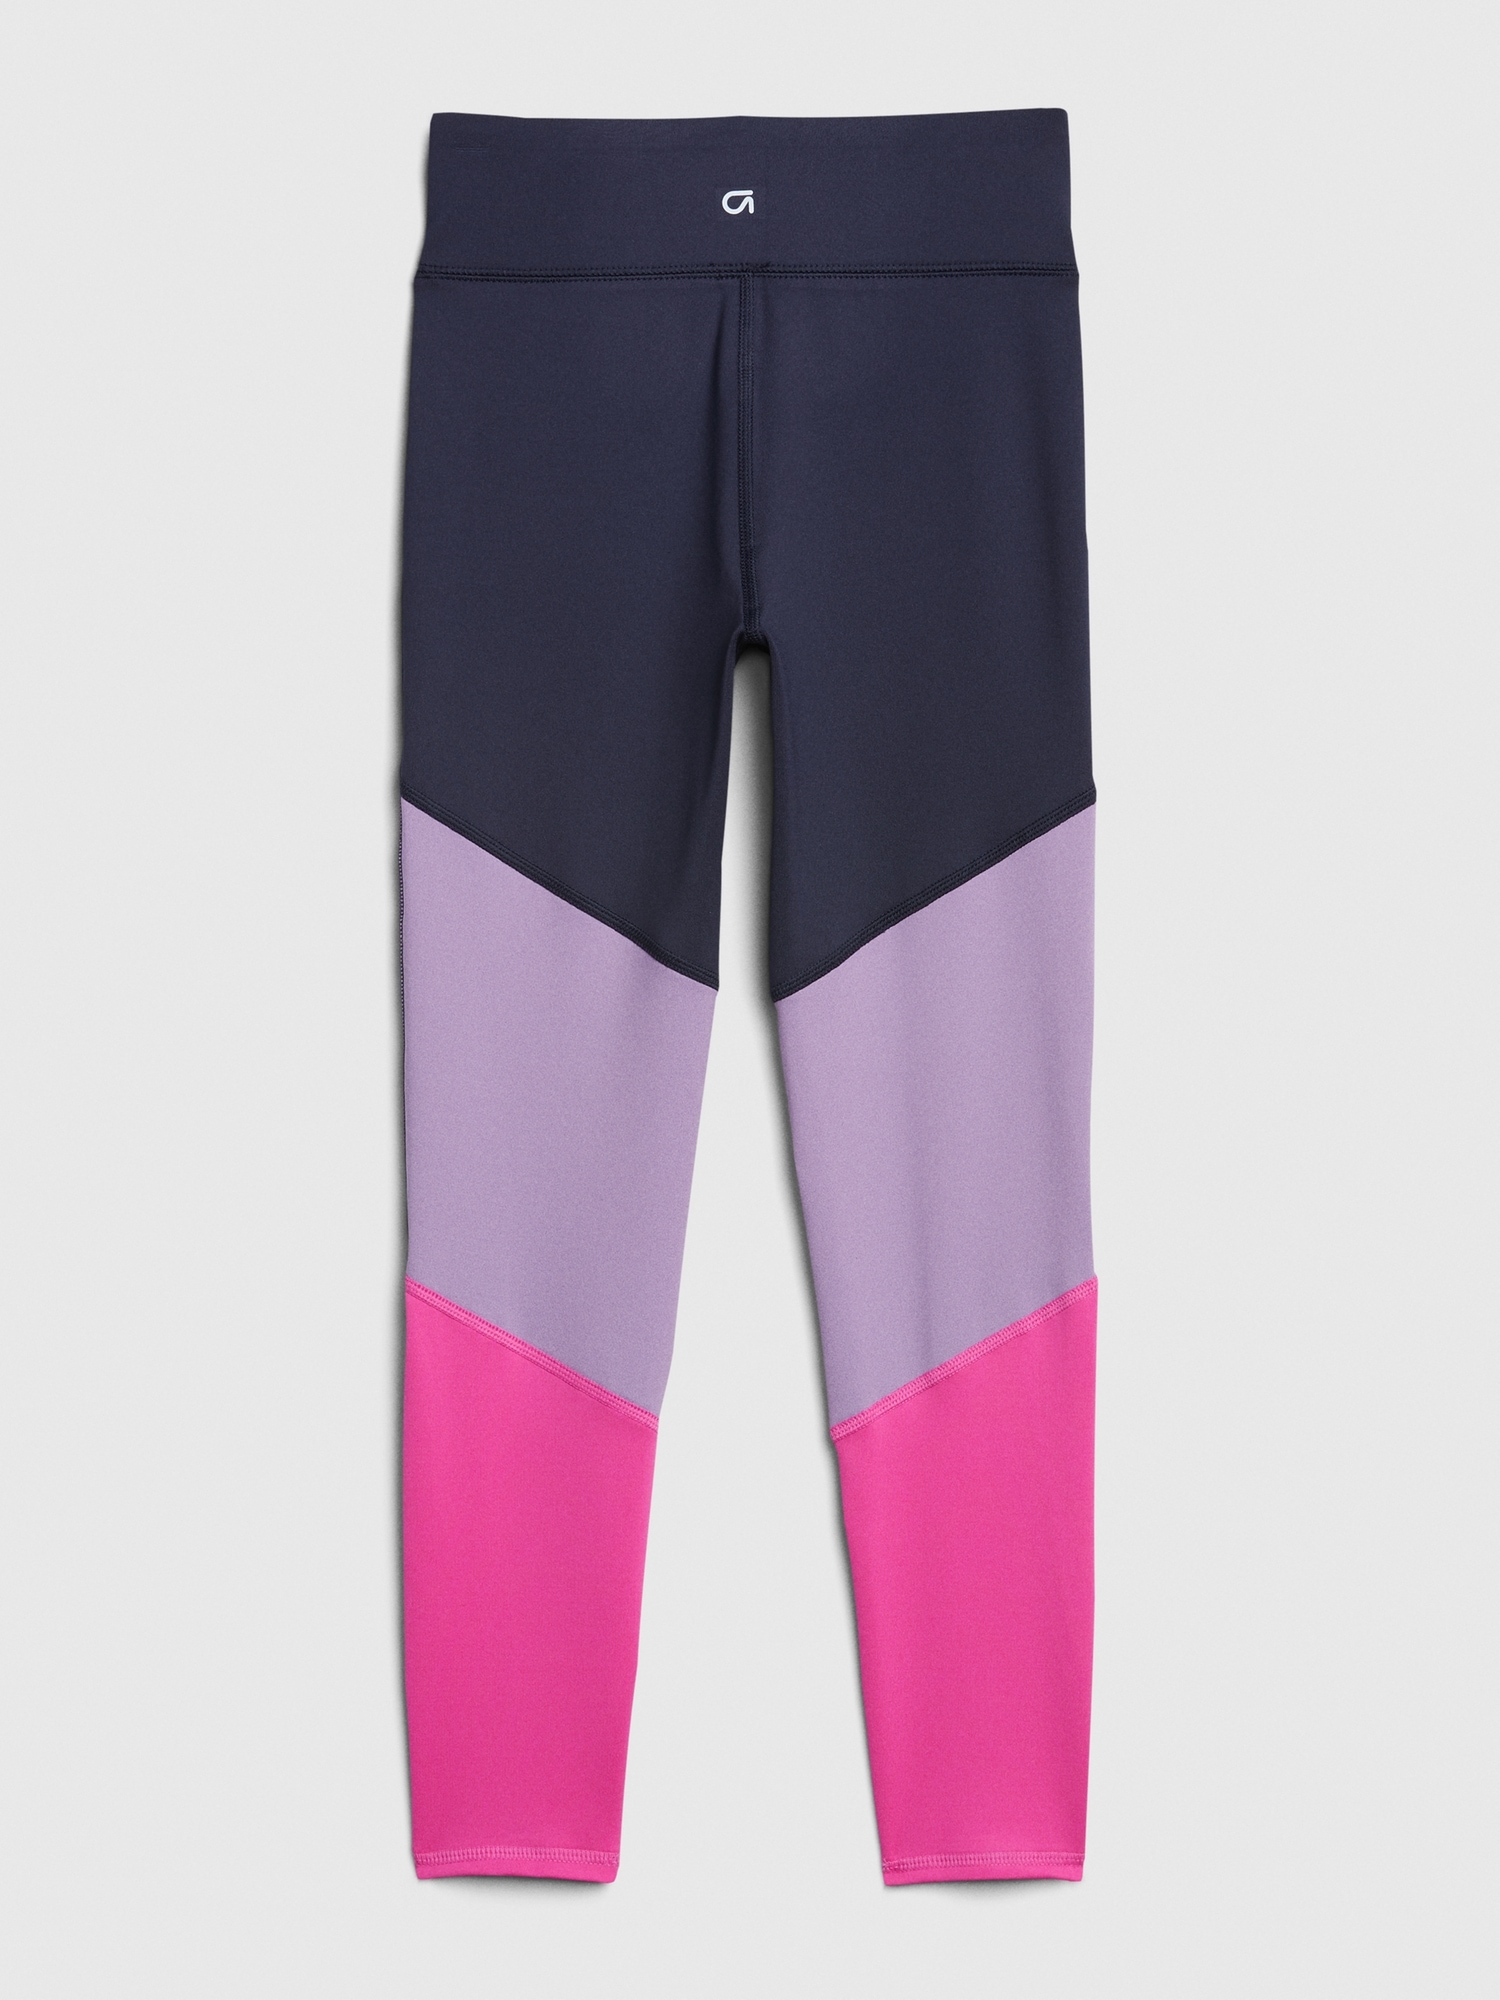 Girls / Teen leggings GapFit size XXL 14 16 pink stars leggings